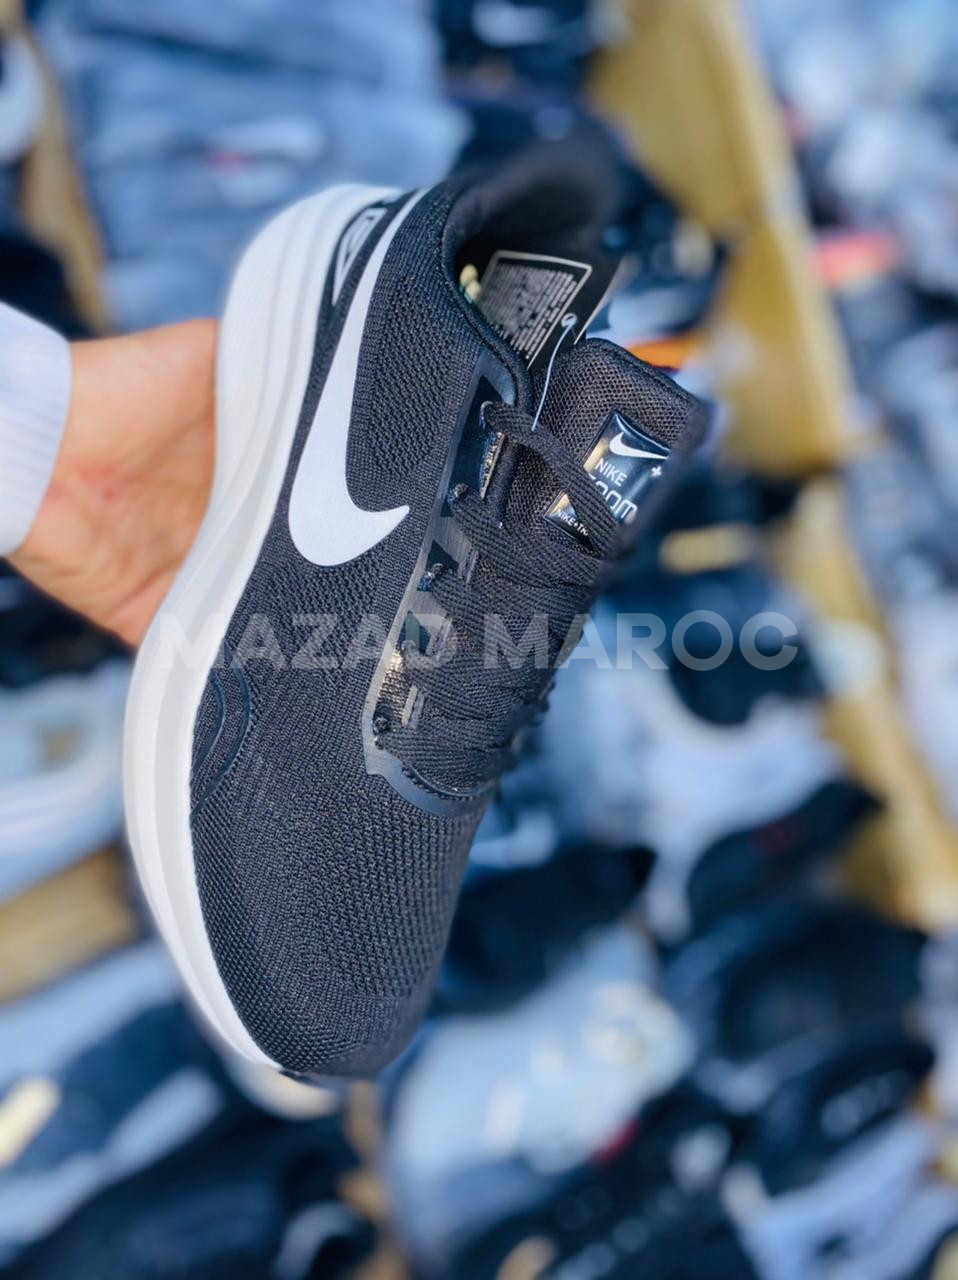 Promotion sur Nike zoom